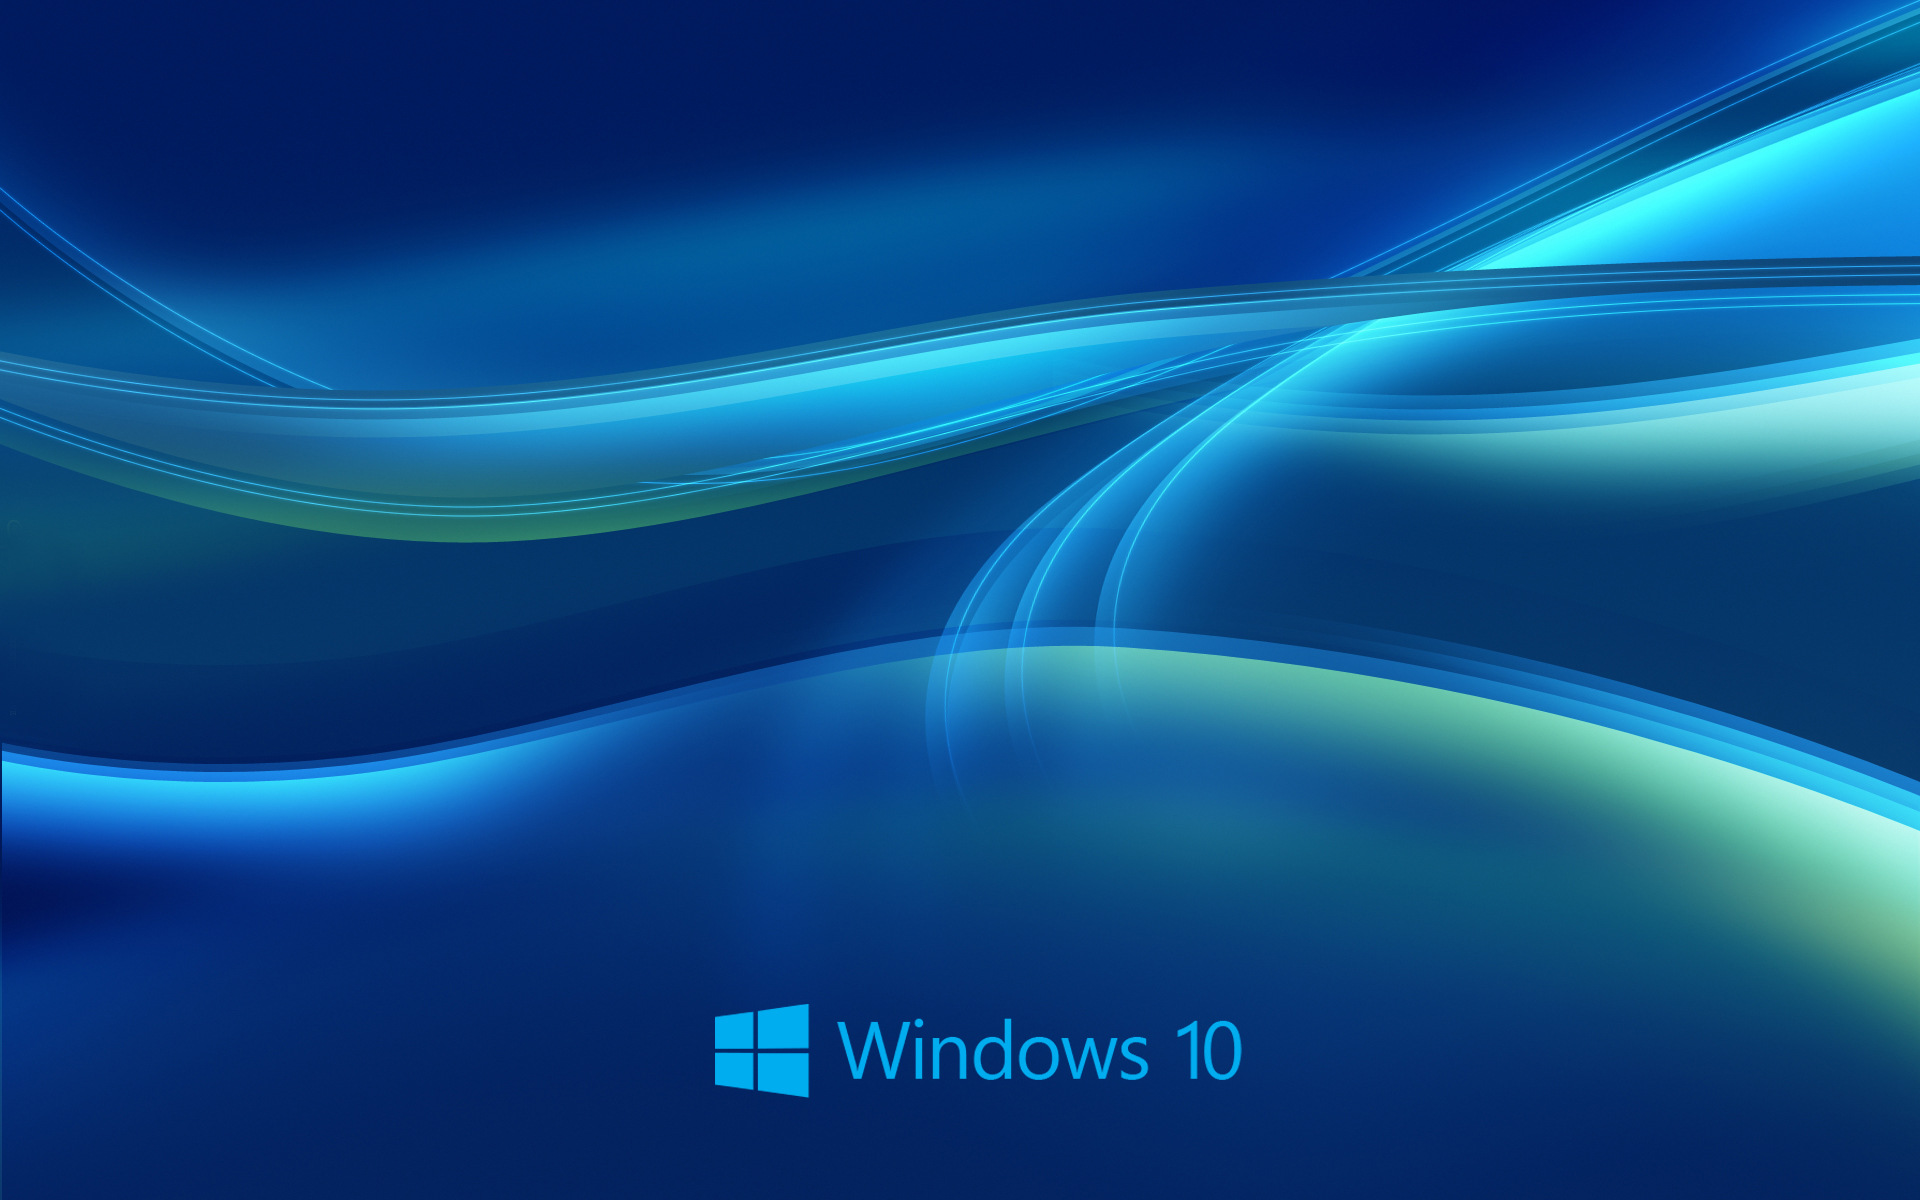 original windows 10 download